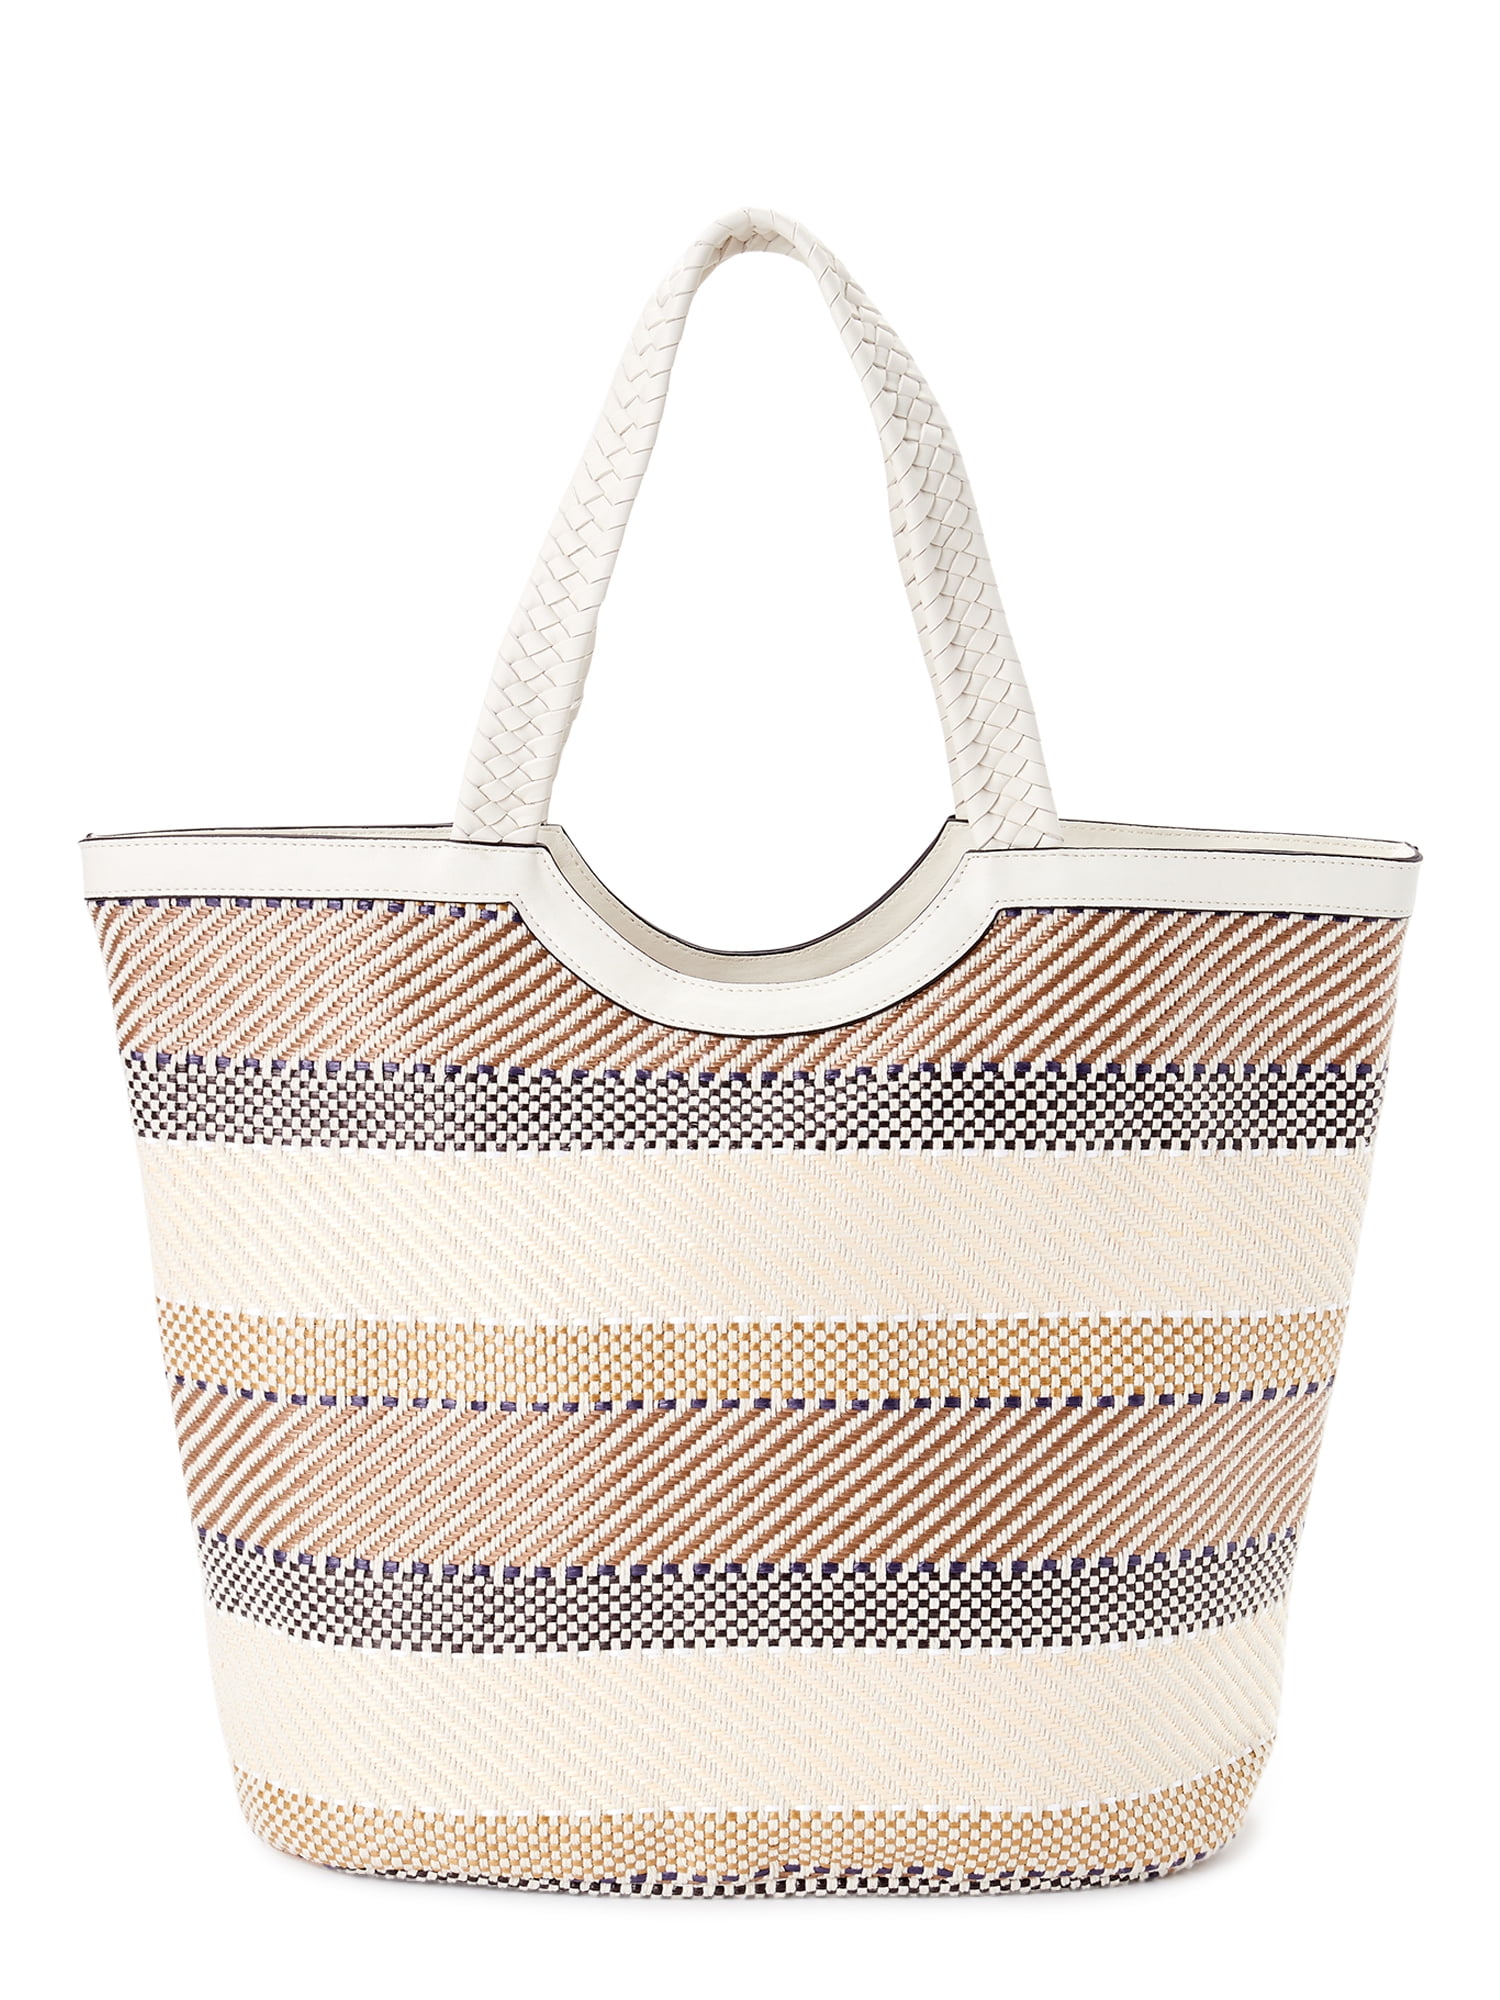 GL-Turelifes Round Summer Straw Bag Big Weave Handbags Beach Shoulder Bags  Vocation Tote HandbagsTravel Bag for Women